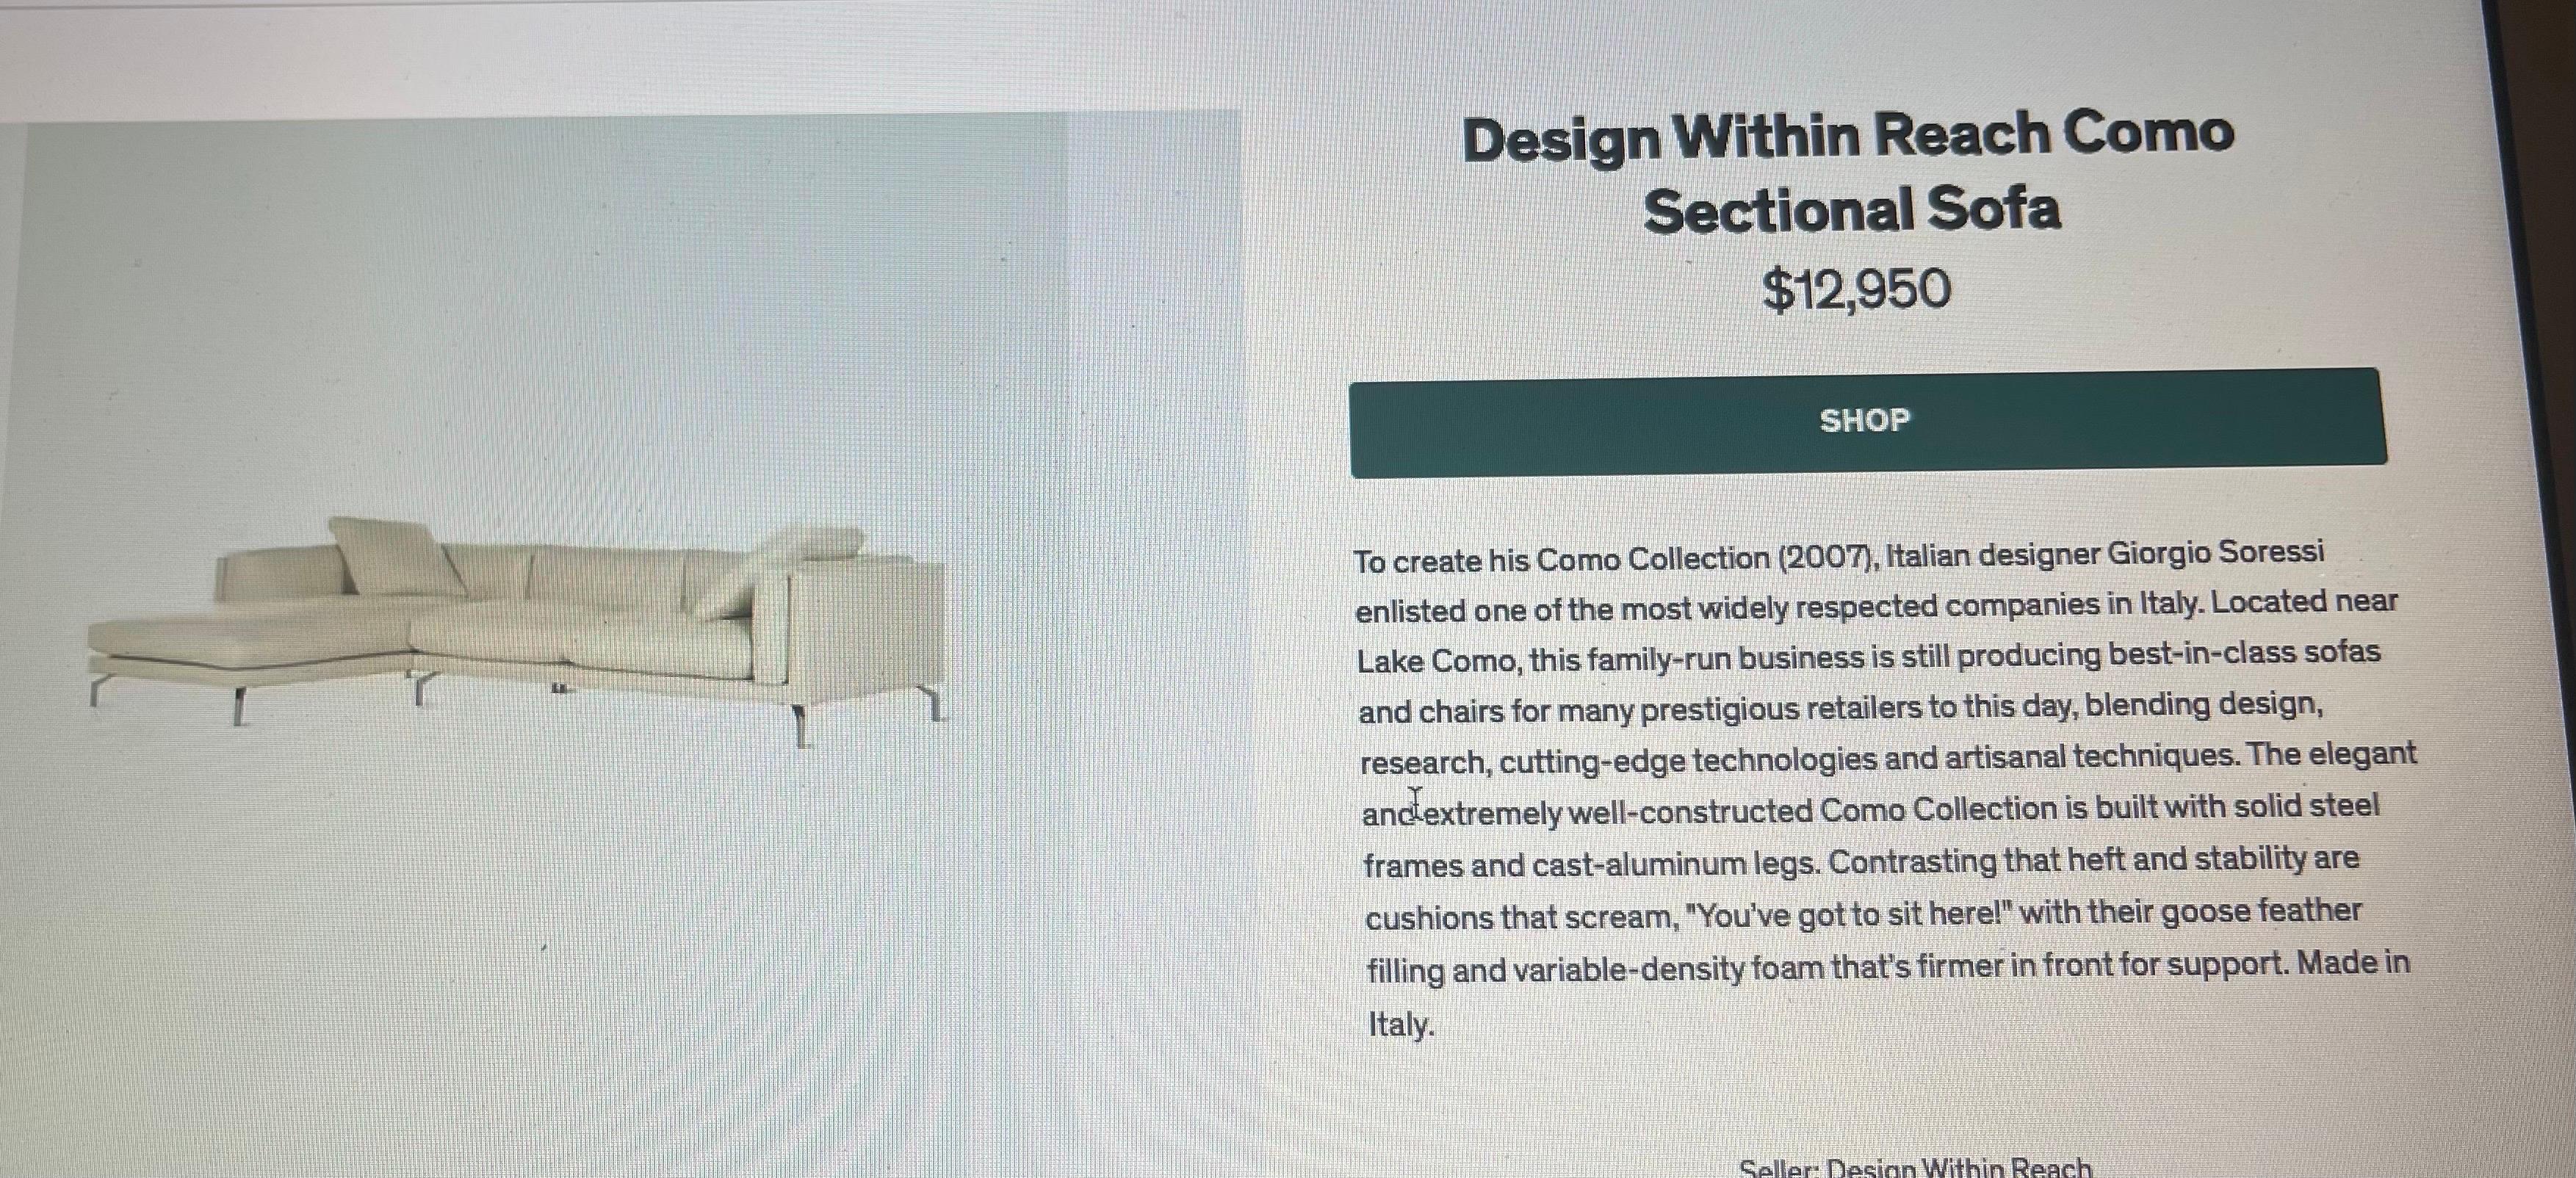 Design Within Reach DWR Como Sectional Sofa by Giorgio Soressi Made in Italy 9